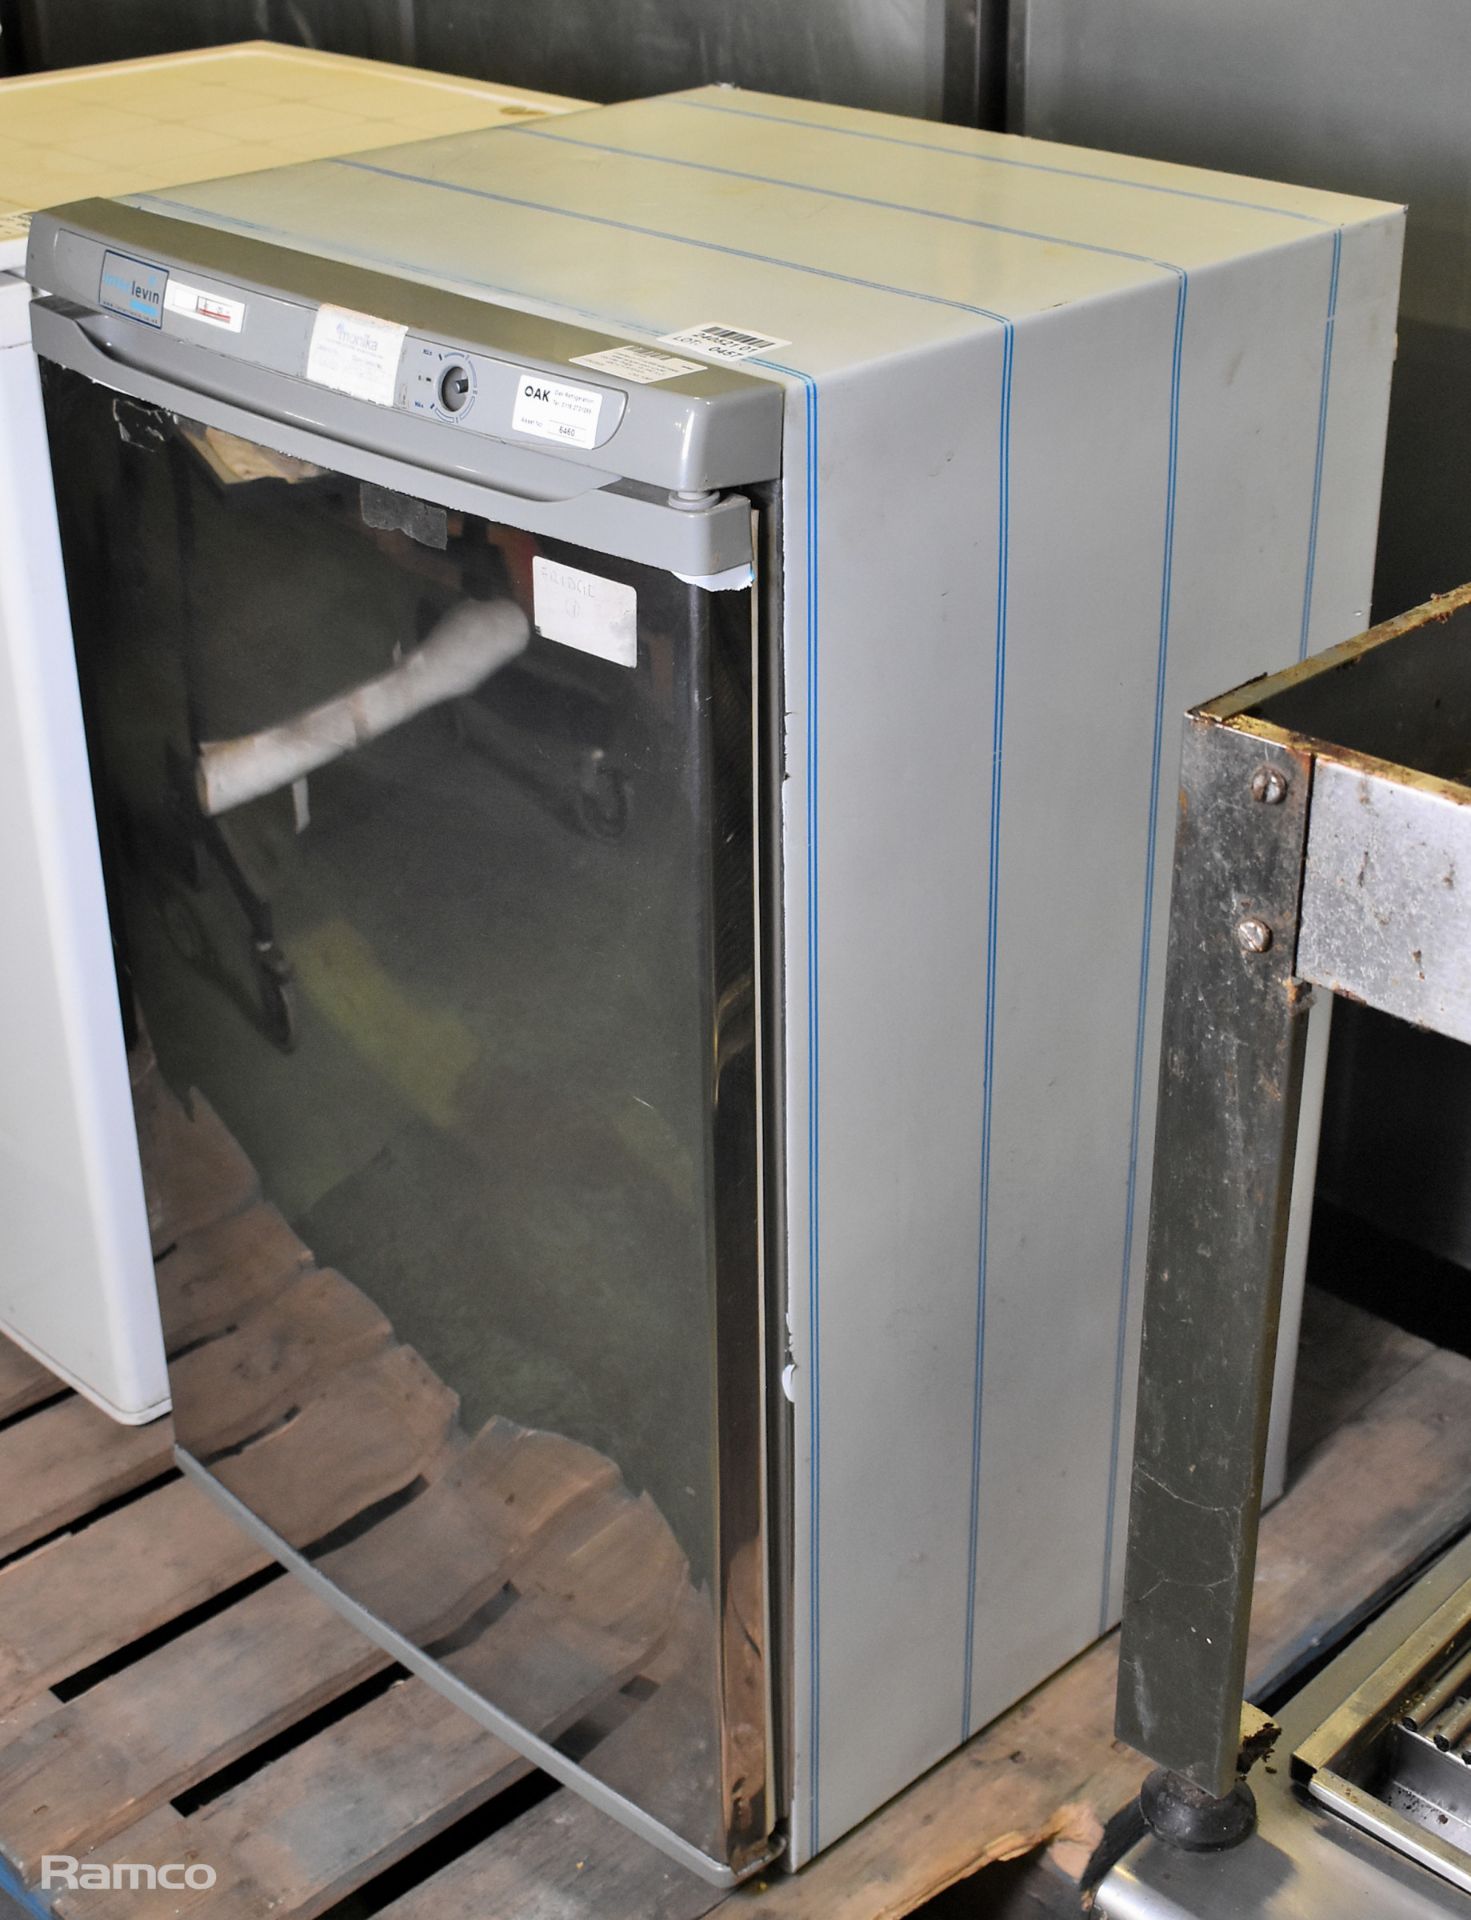 Interlevin F140SS stainless steel single door under counter fridge - W 540 x D 480 x H 870mm - Image 5 of 5